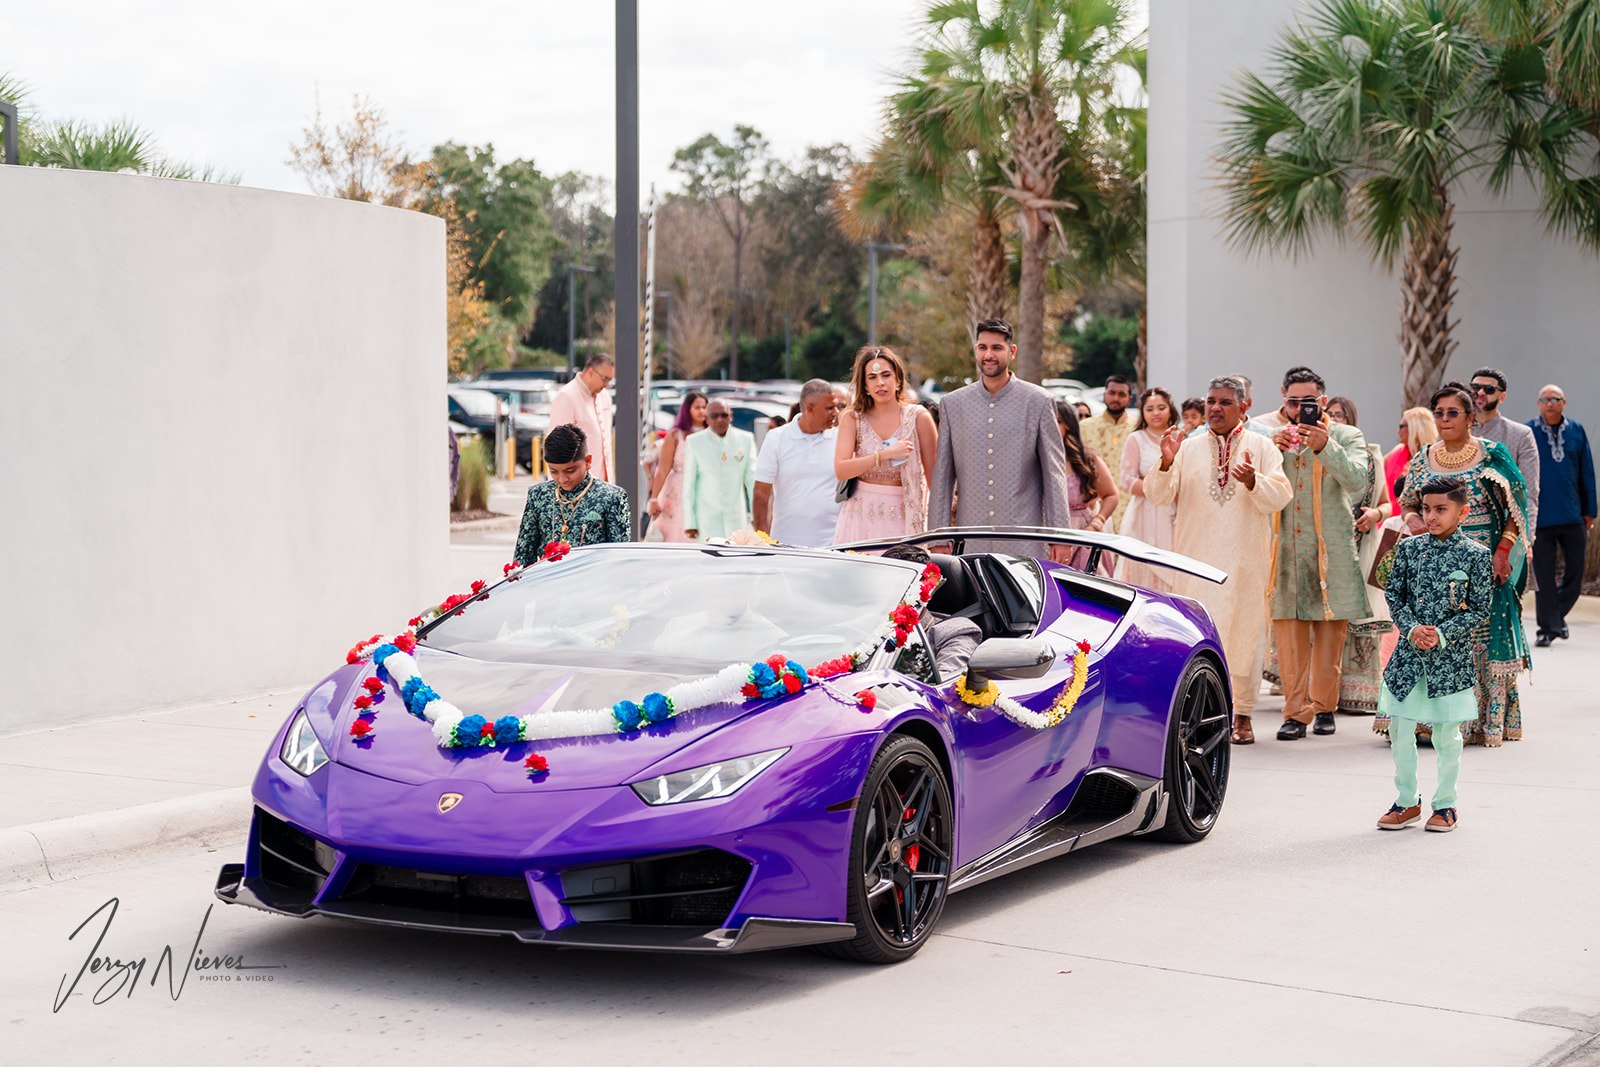 Javin drives a purple Lamborghini Huracan at the beginning of a parade.